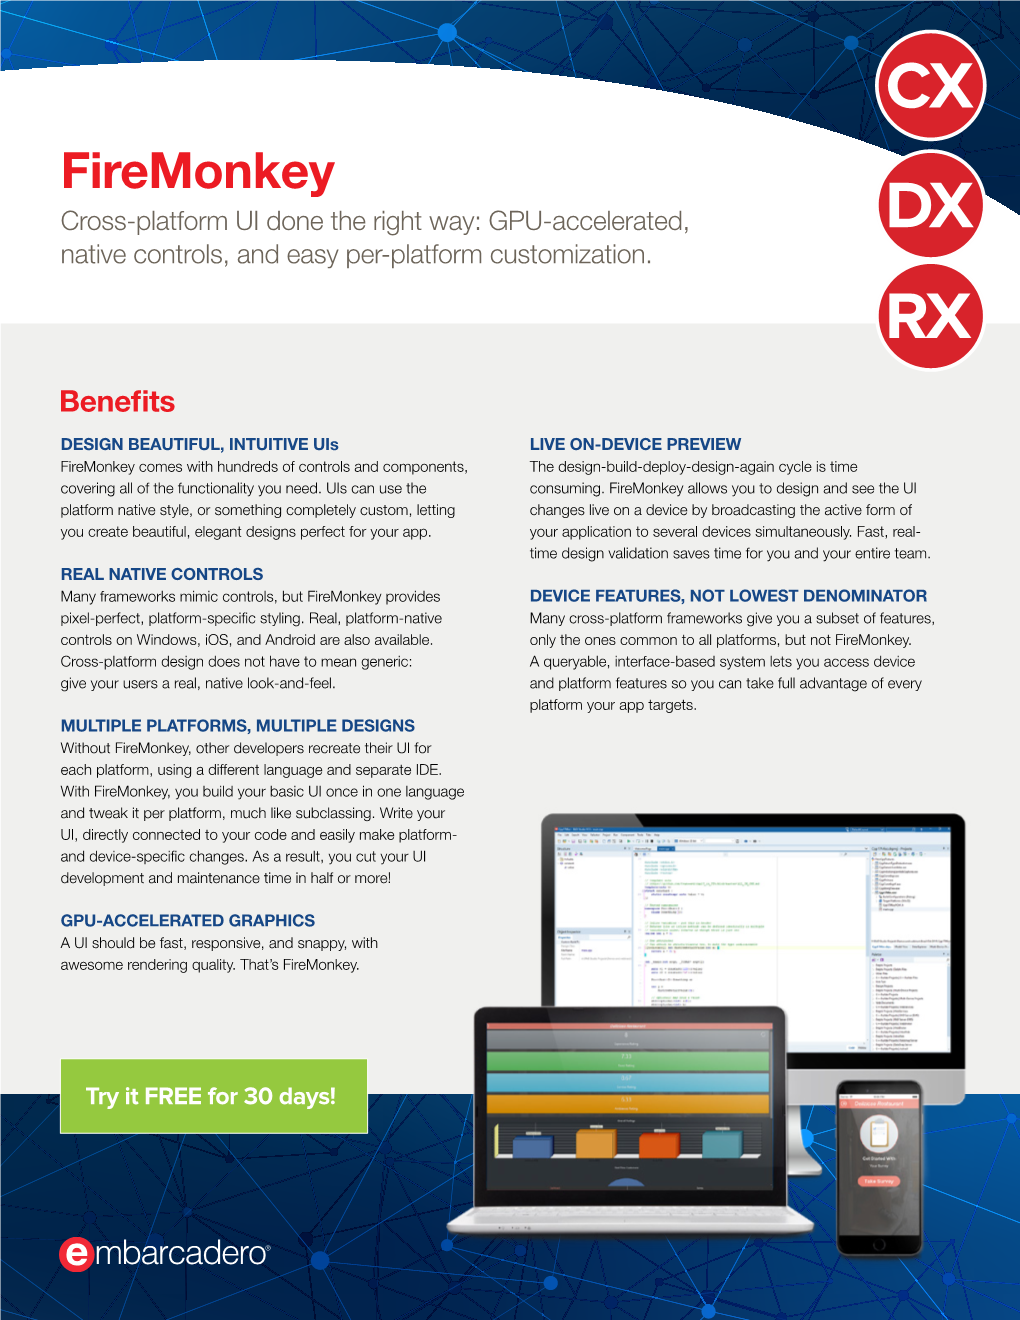 Firemonkey Cross-Platform UI Done the Right Way: GPU-Accelerated, Native Controls, and Easy Per-Platform Customization